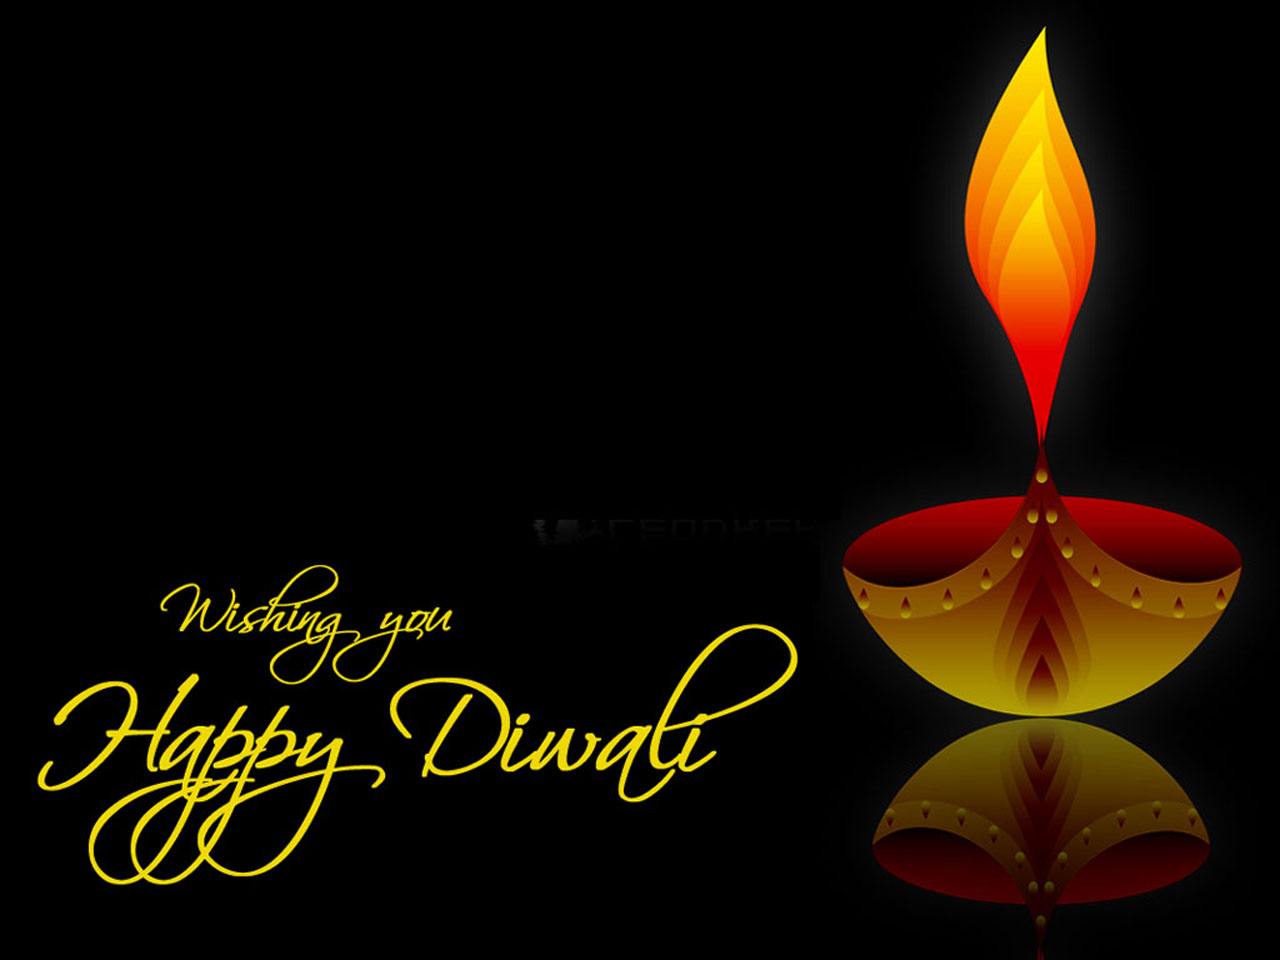 Wishing You Happy Diwali WIshes Wallpaper